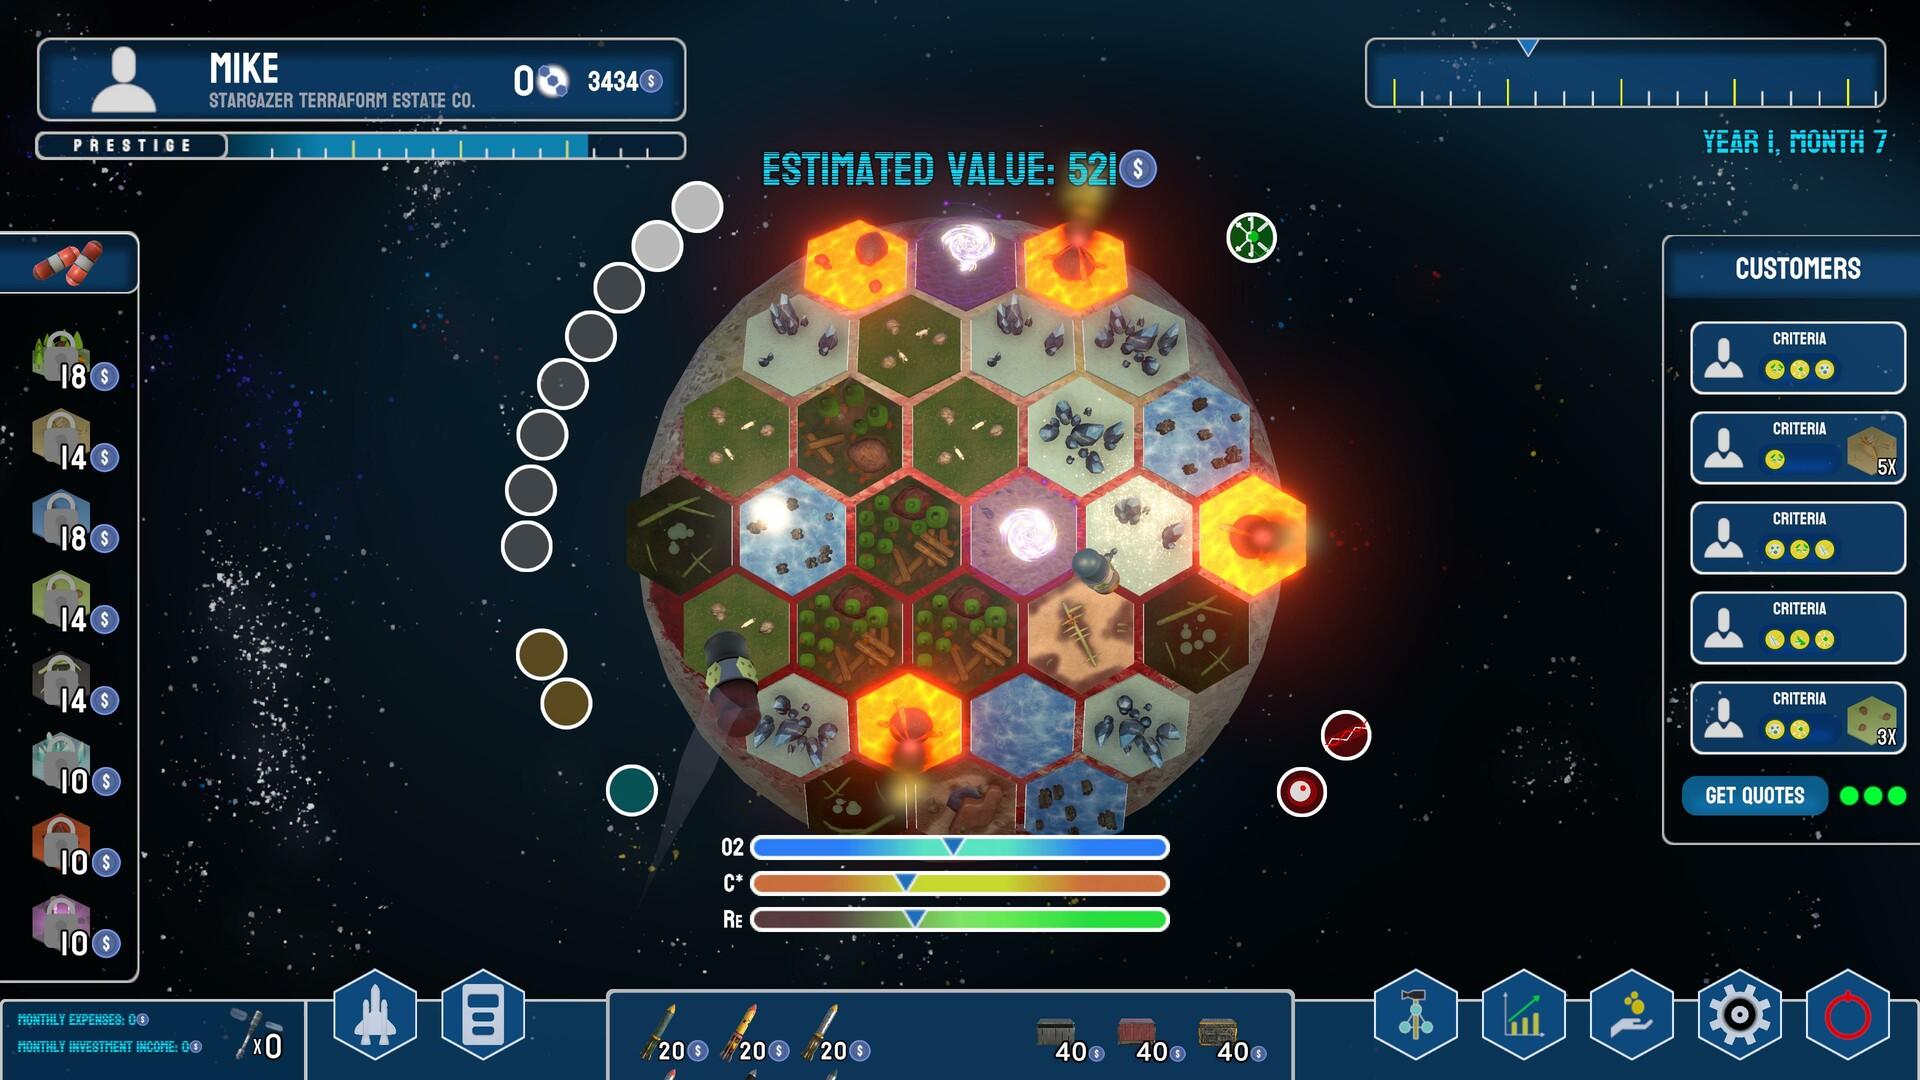 Screenshot of Stargazer's Terraforming Estate Co.